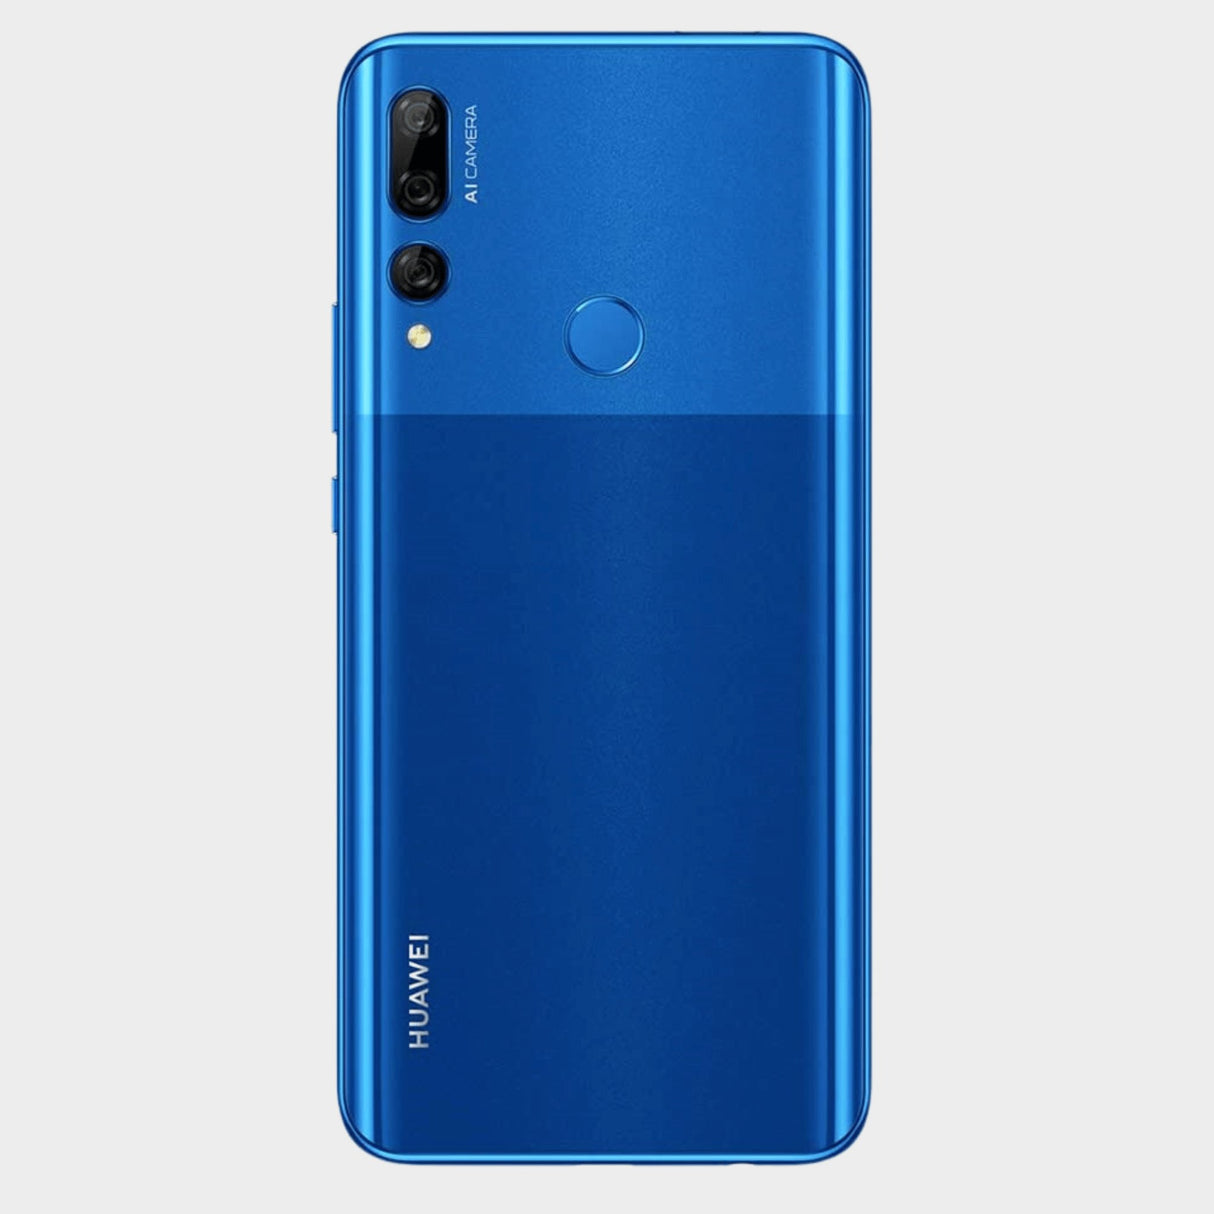 Huawei Y9 Prime 2019 - 64GB | KWT Tech Mart